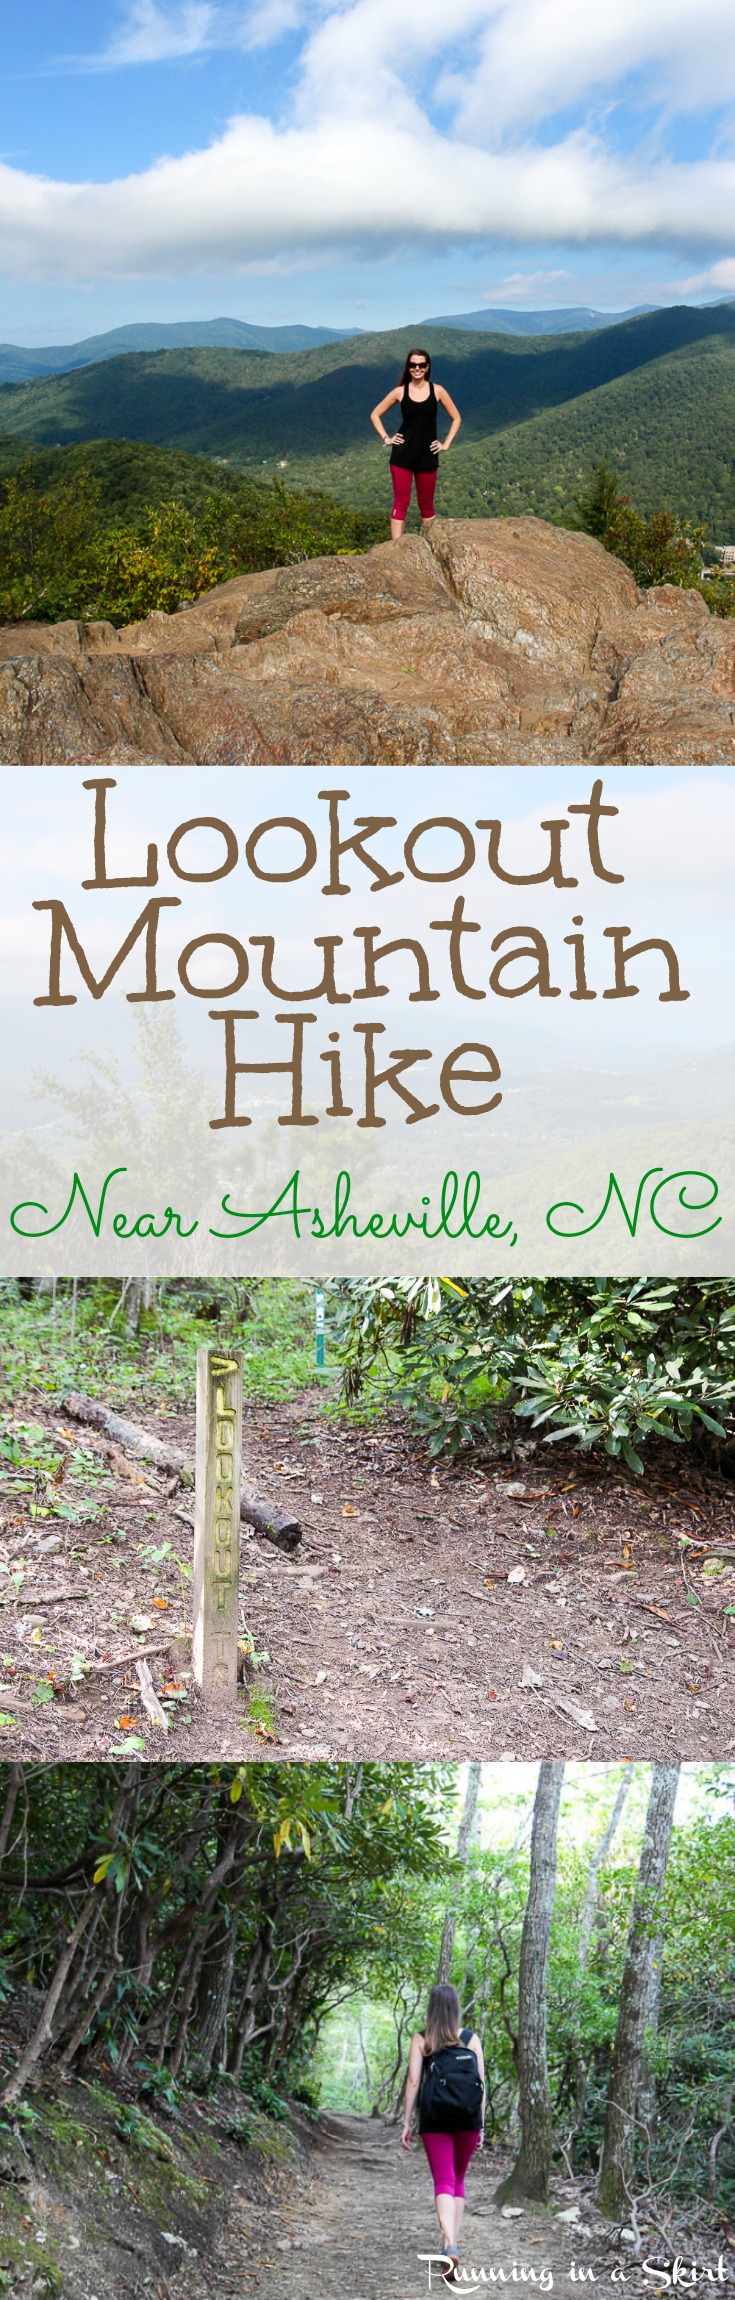 lookout-mountain-montreat-hiking-near-asheville-nc